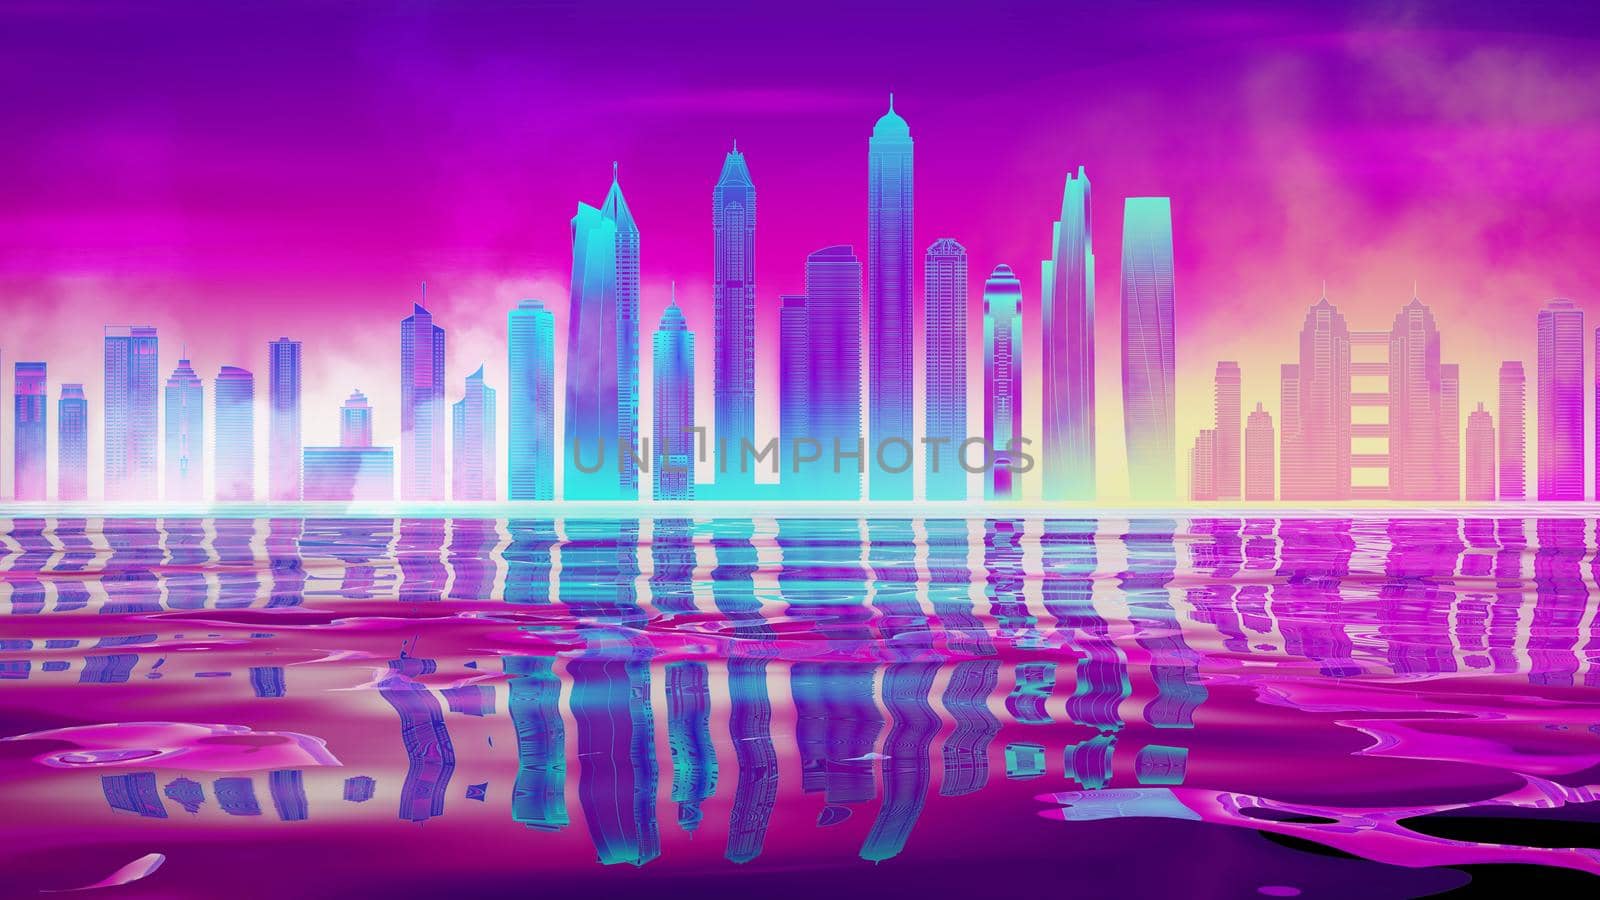 Synthwave pink retro city with the night sky. Digital city retro future illustration arcade background. Night city neon glow by DmytroRazinkov